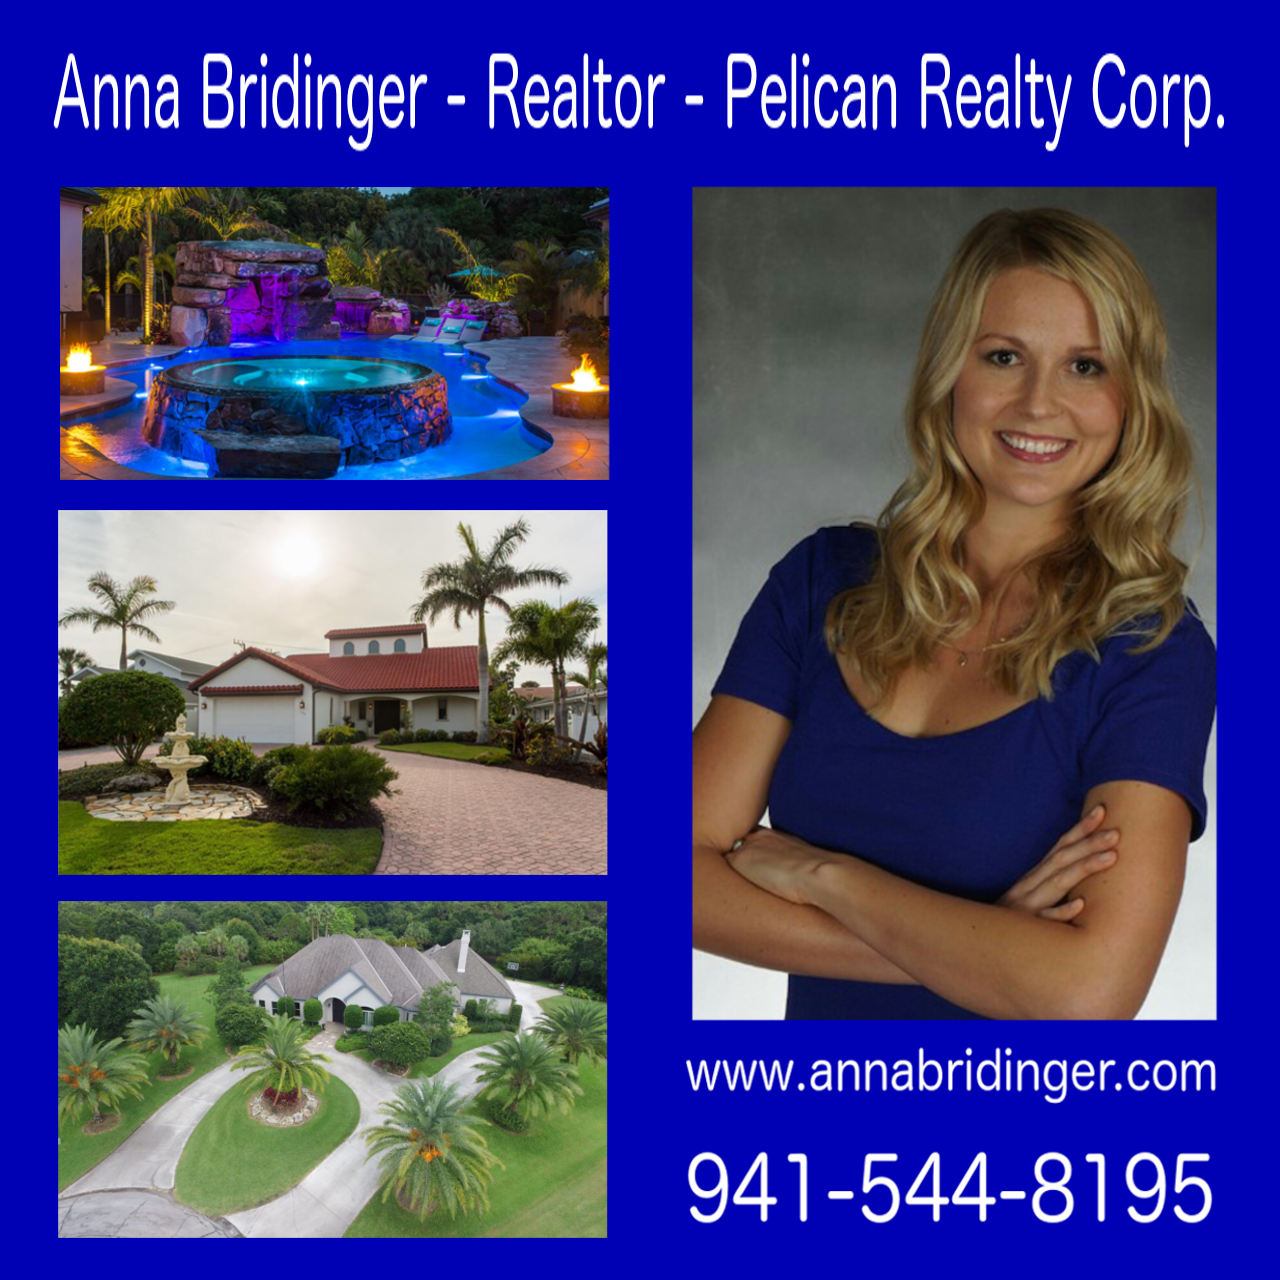 http://www.polishfloridabiz.com/002-anna-bridinger-realtor-at-pelican-realty-corp/